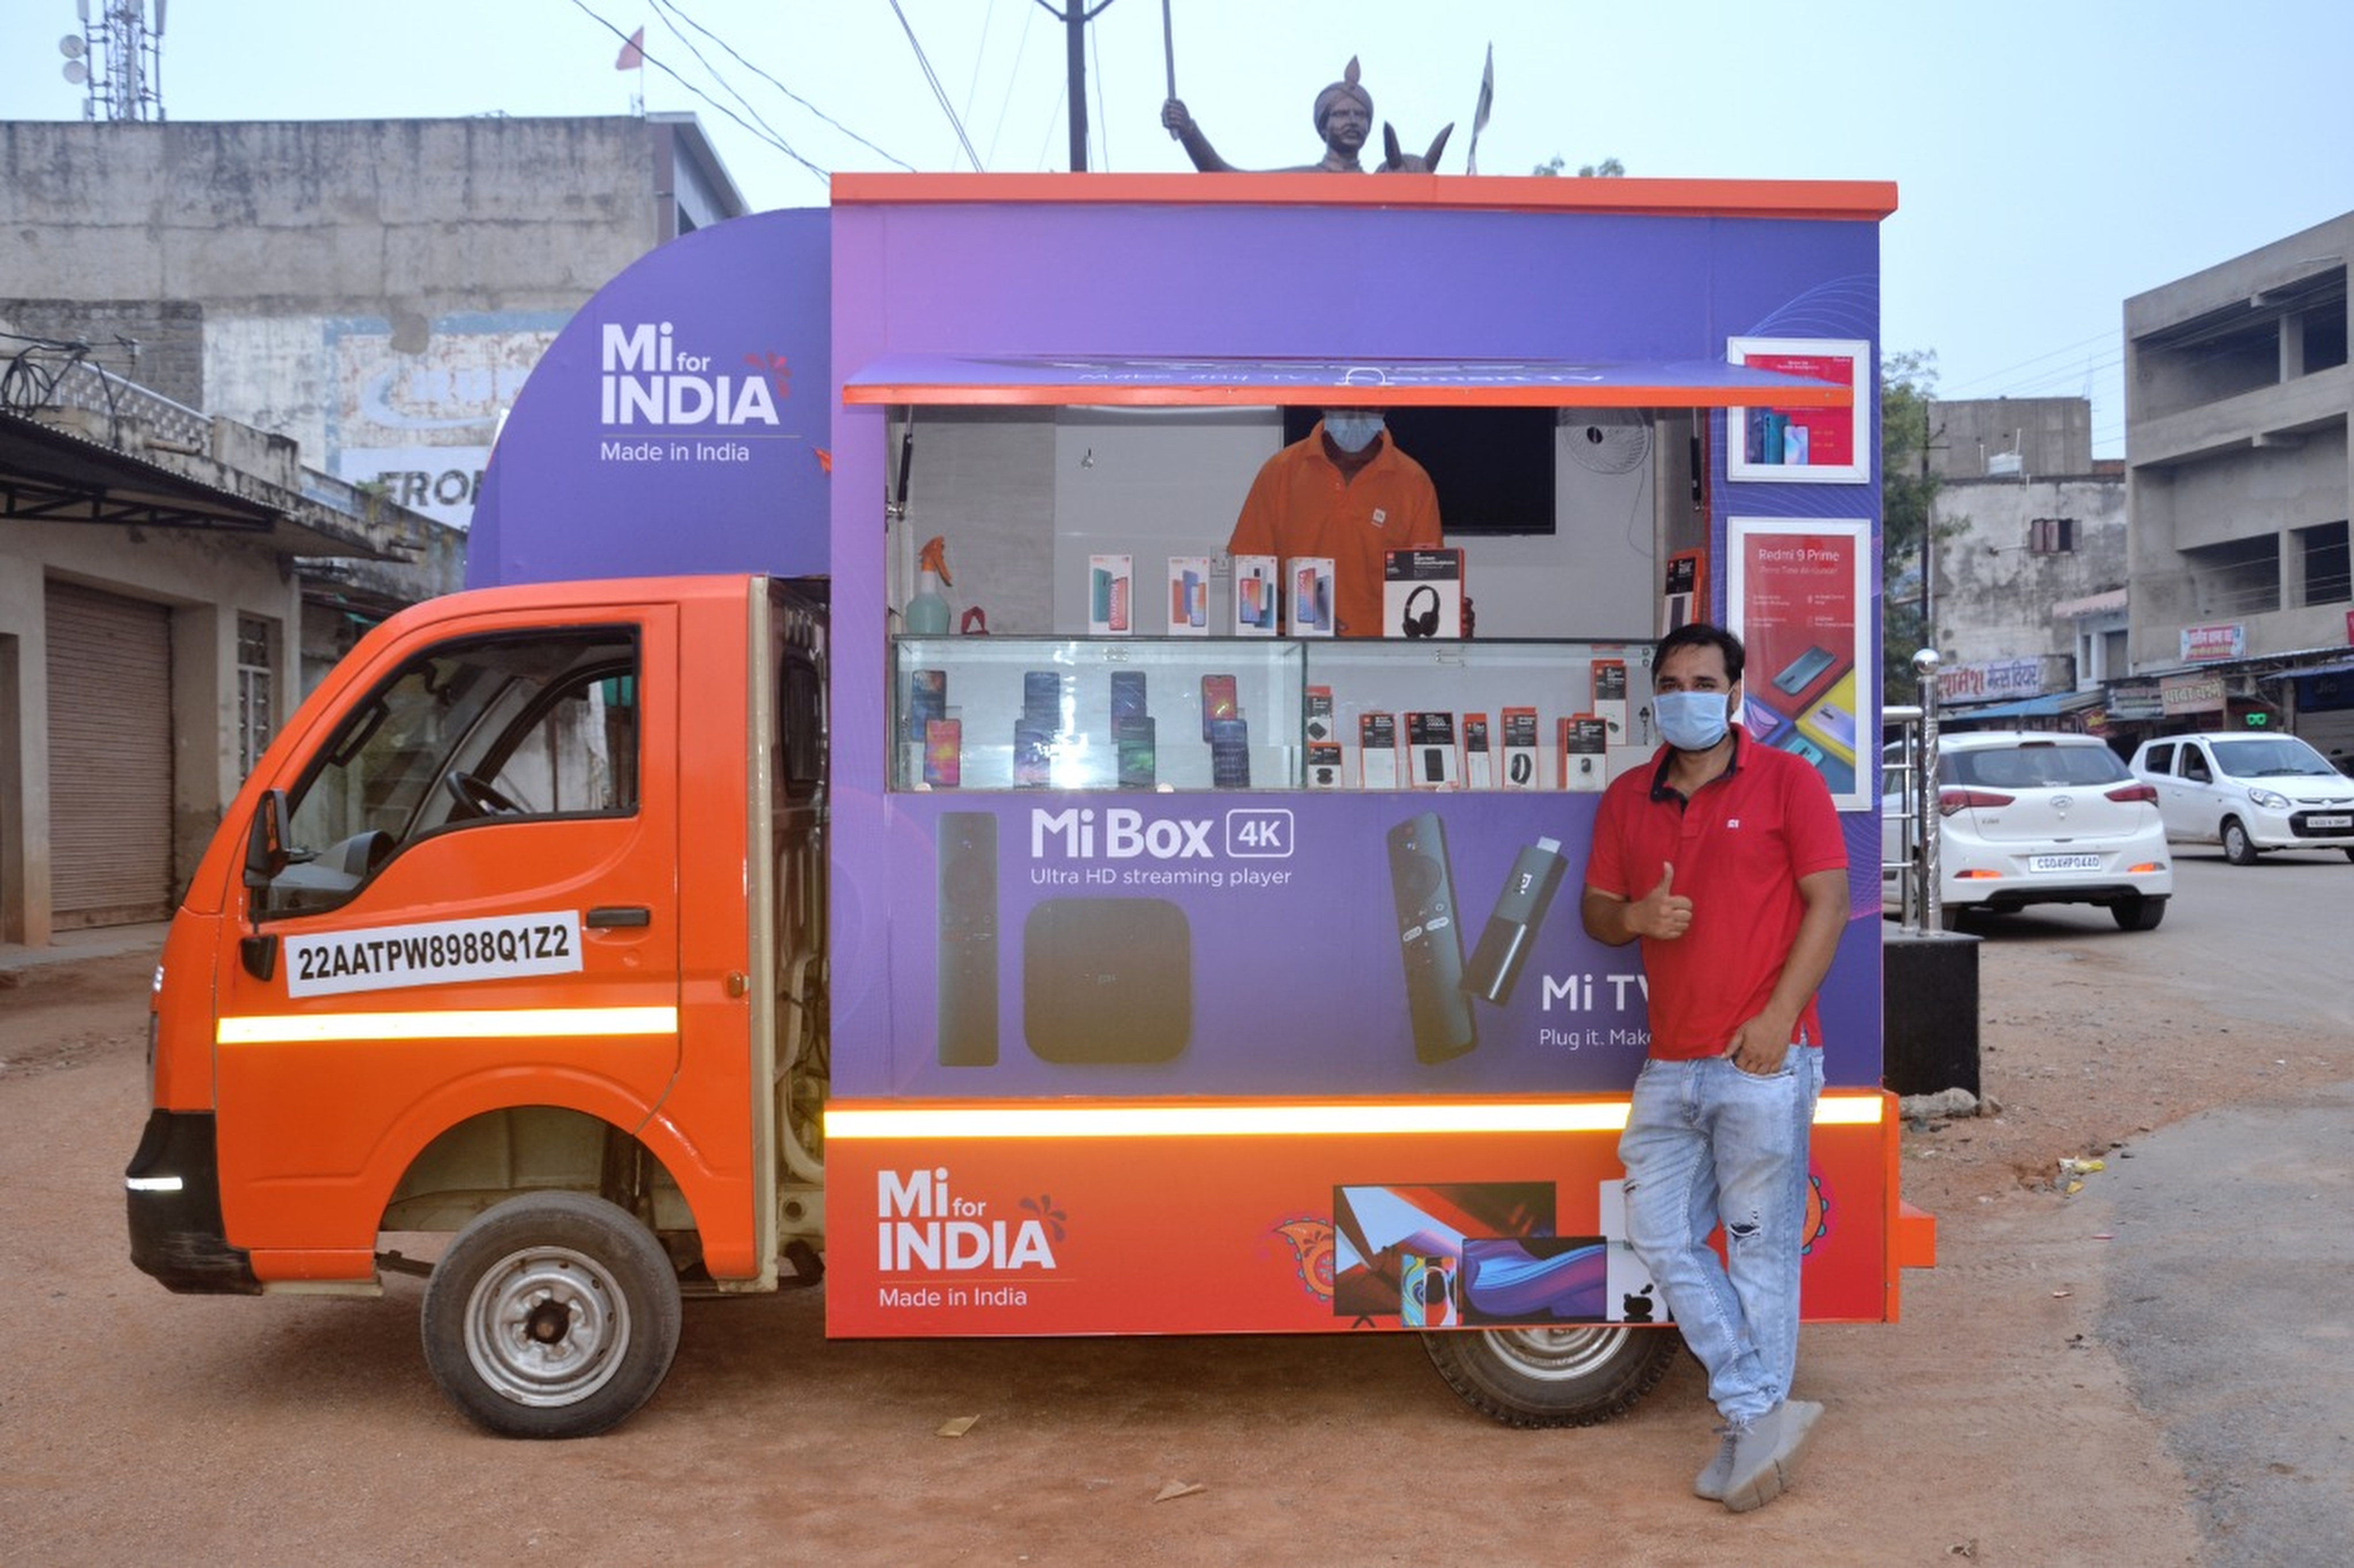 A Xiaomi Mi Store on Wheels in remote India. Photo: SCMP